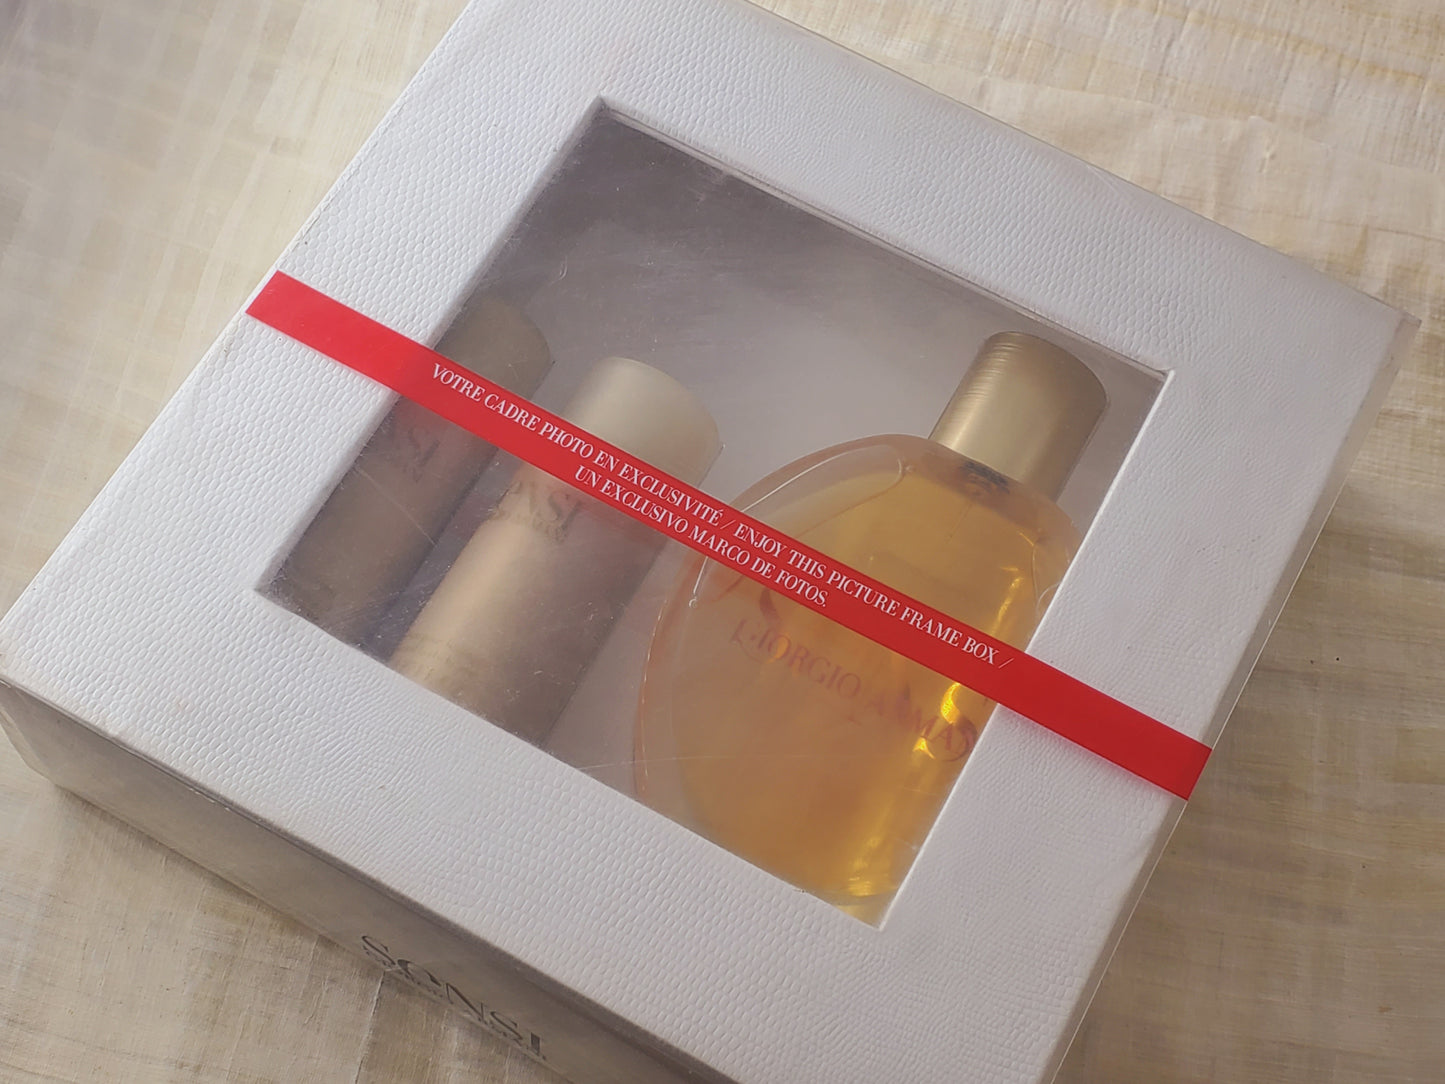 Giorgio Armani Sensi EDP Spray 100 ml 3.4 oz + Shower Jel + Lotion + Picture Frame Box, Vintage, As Pic, SET